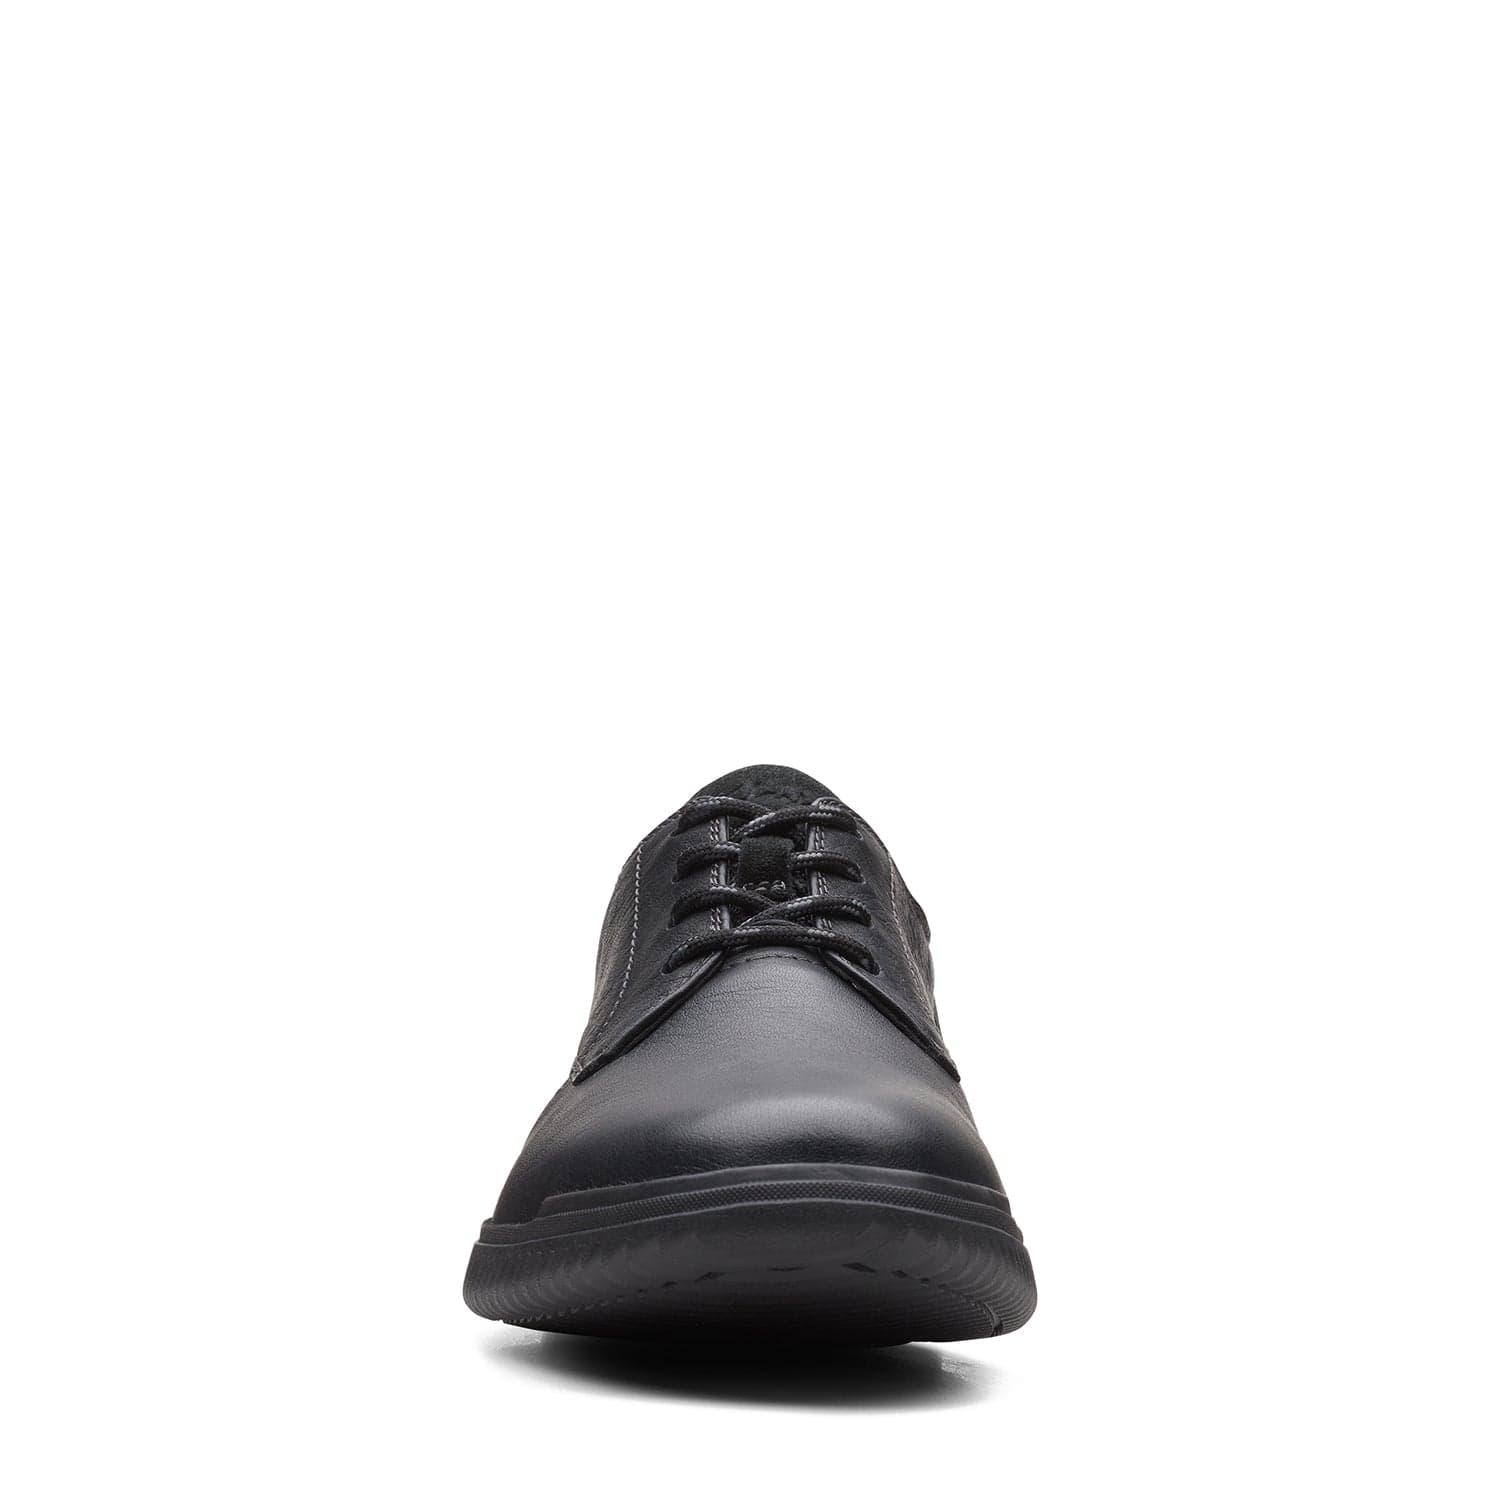 Clarks Donaway Plain - Shoes - Black Leather - 261634548 - H Width (Wide Fit)